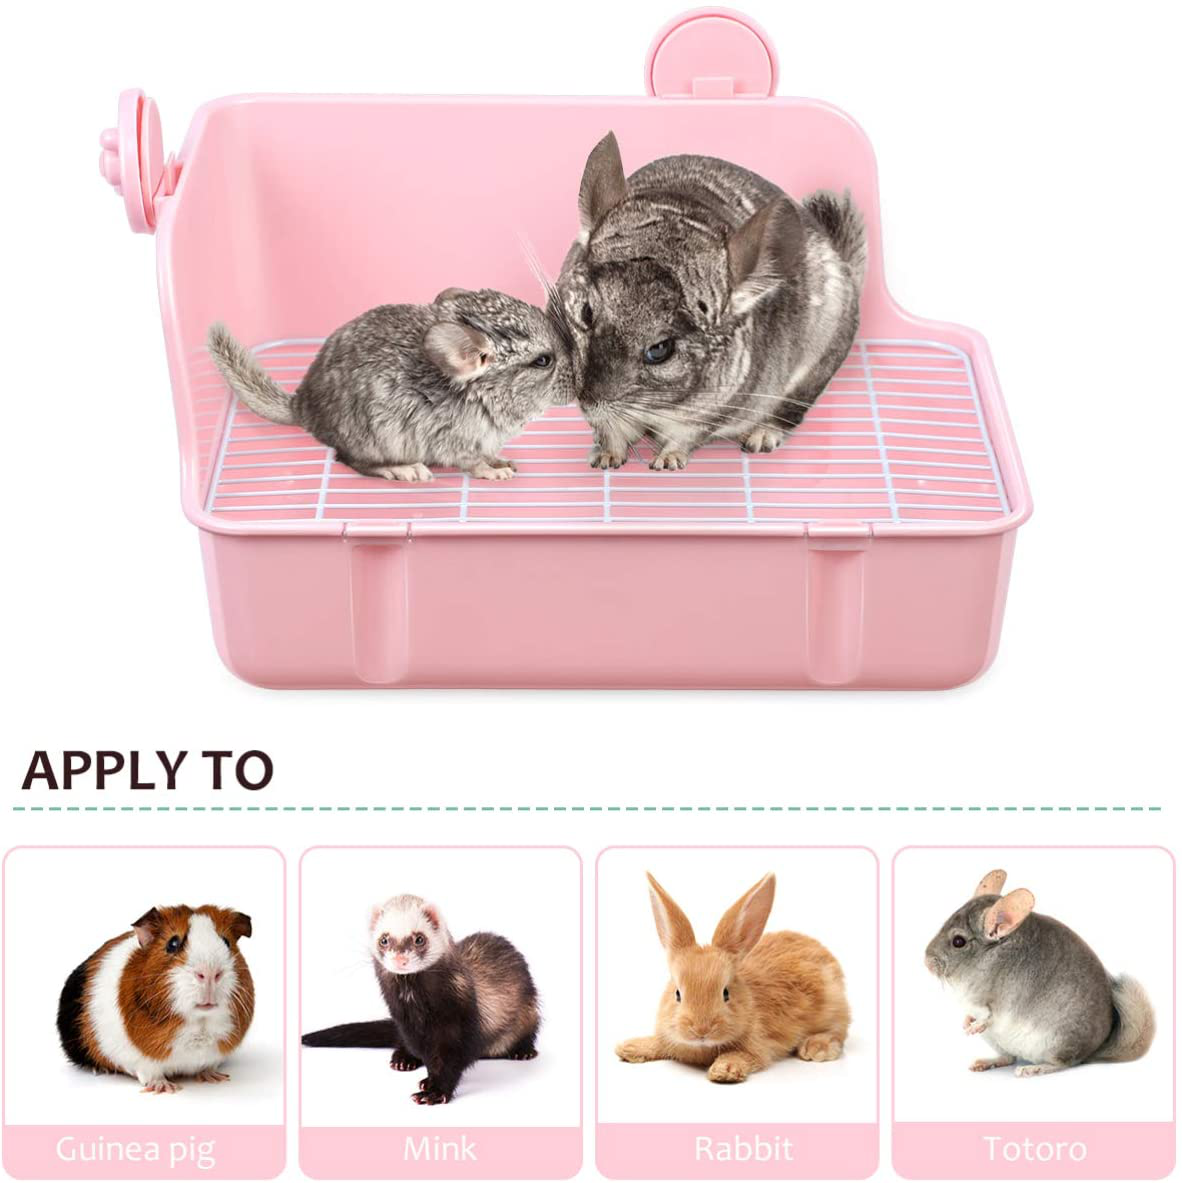 POPETPOP Small Animal Litter Box Toilet - Plastic Square Rabbit Cage Potty Trainer Corner Litter Bedding Box for Small Animals/Rabbits/Guinea Pigs/Chinchilla/Ferret/Galesaur